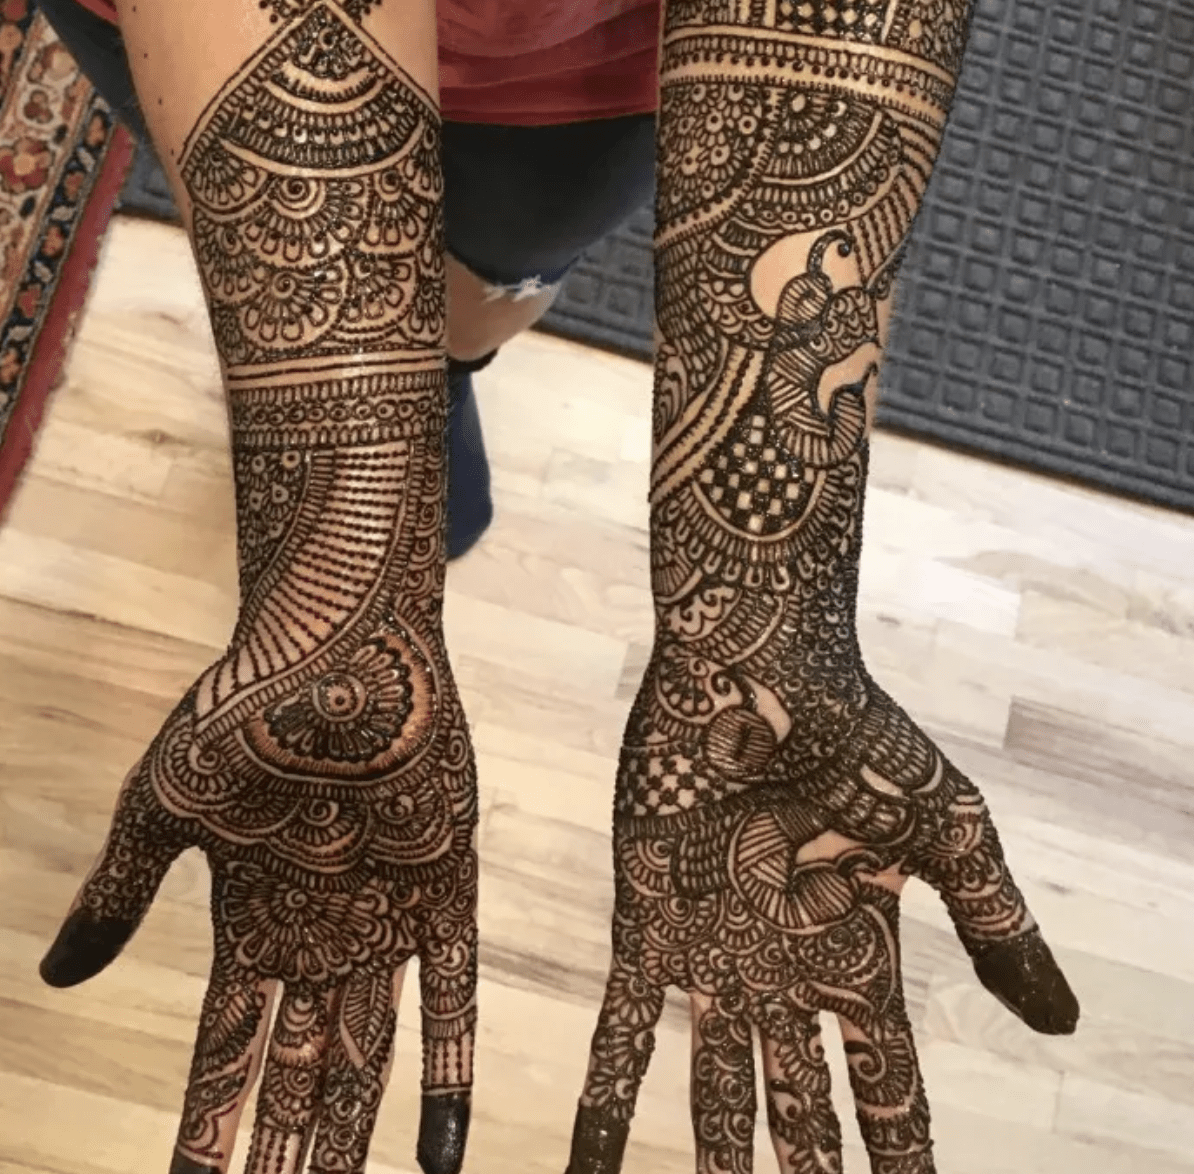 Henna Indian body art by Rupa